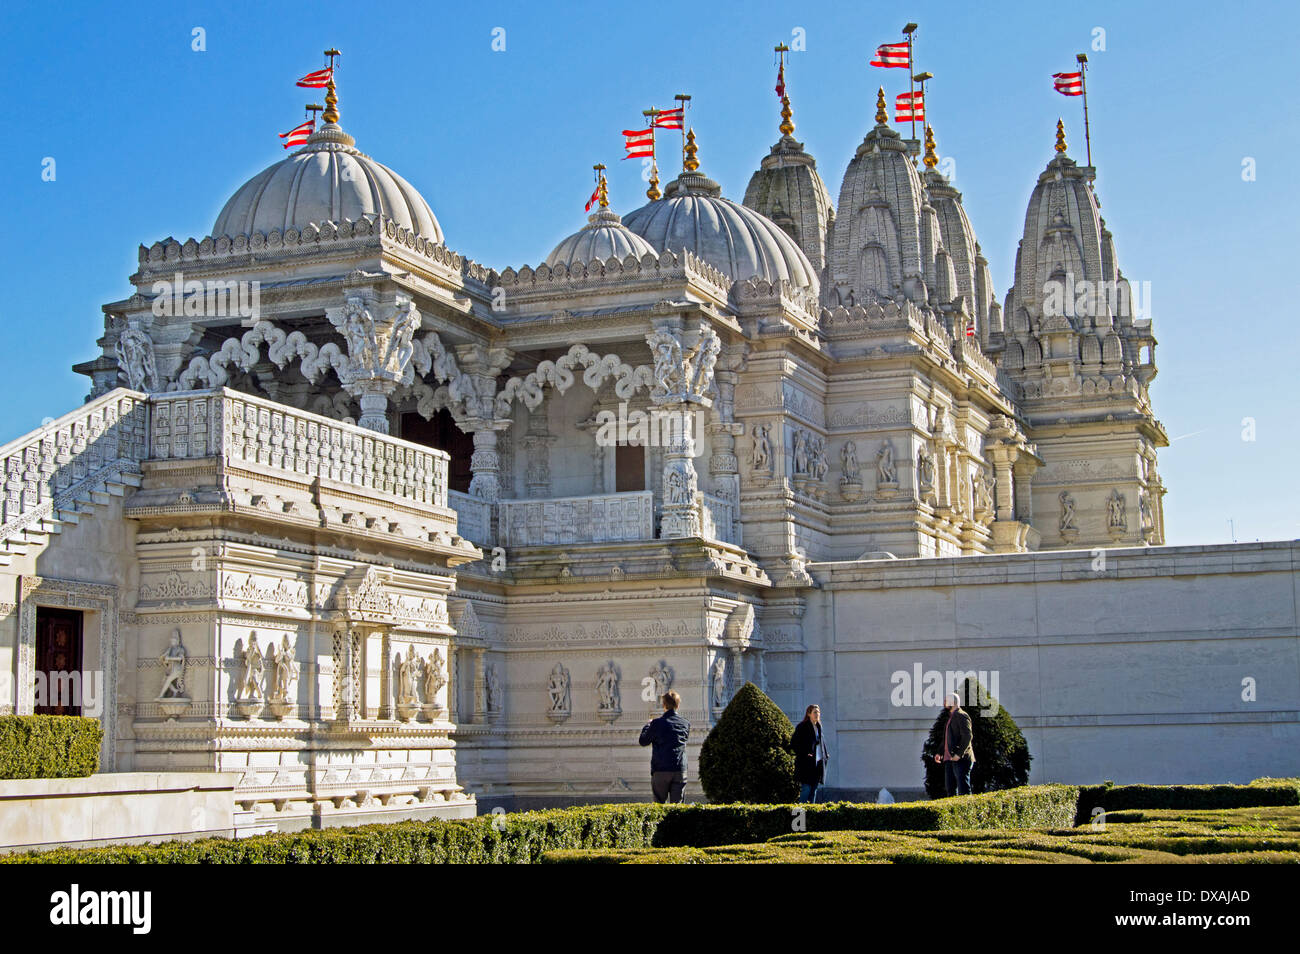 Temple BAPS Shri Swaminarayan Mandir (Temple), la Neasden Neasden, London Borough of Brent, London, Angleterre, Royaume-Uni Banque D'Images